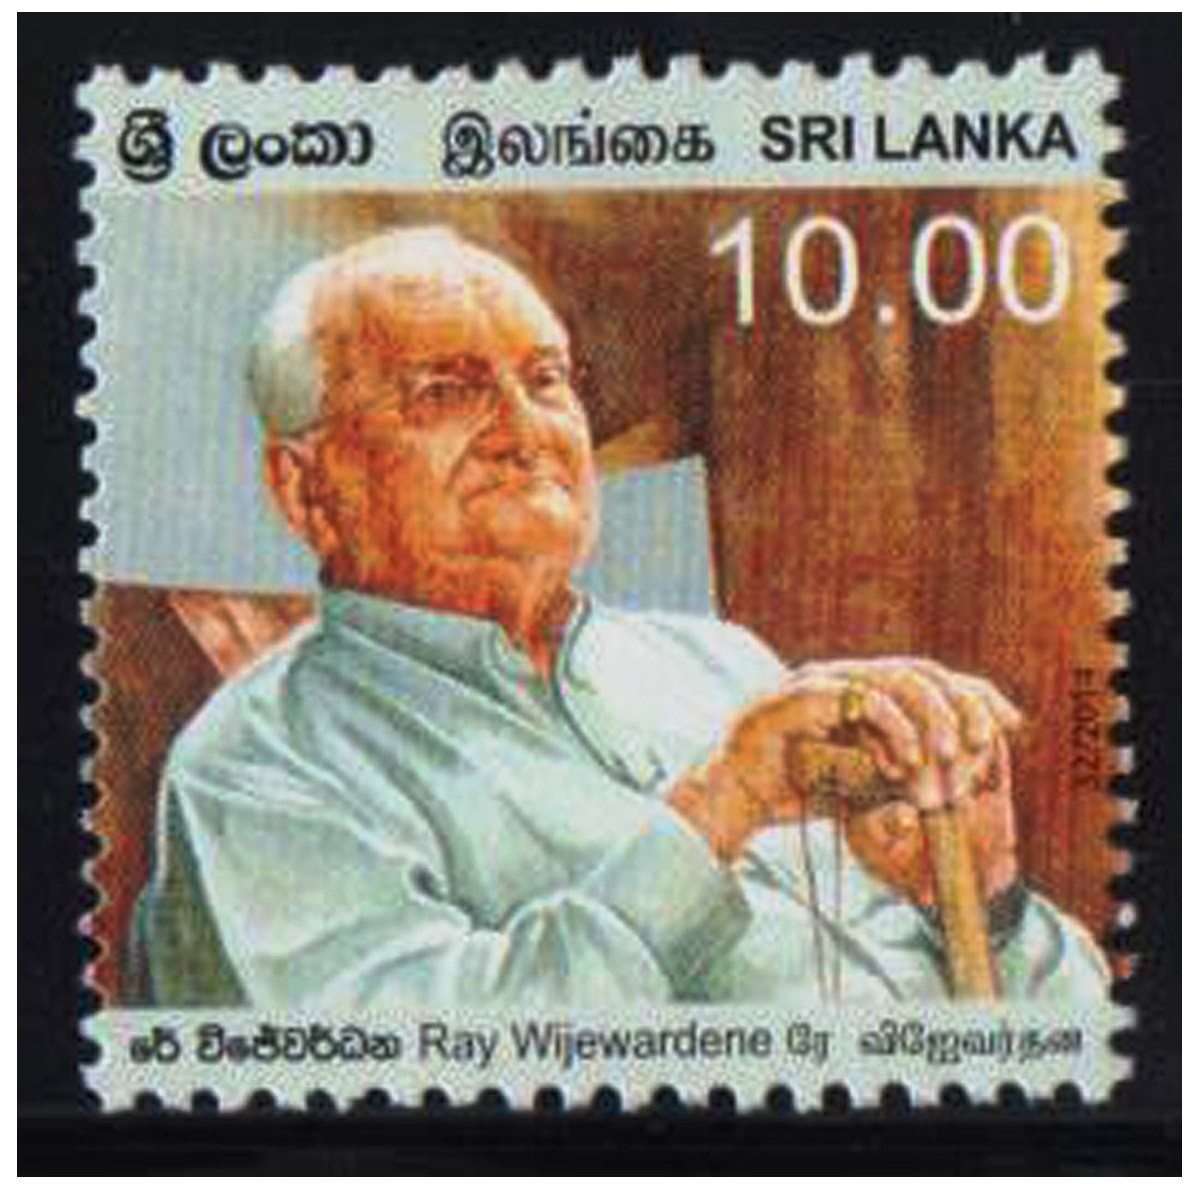 Ray Wijewardene stamp, issued on 31 Oct 2014